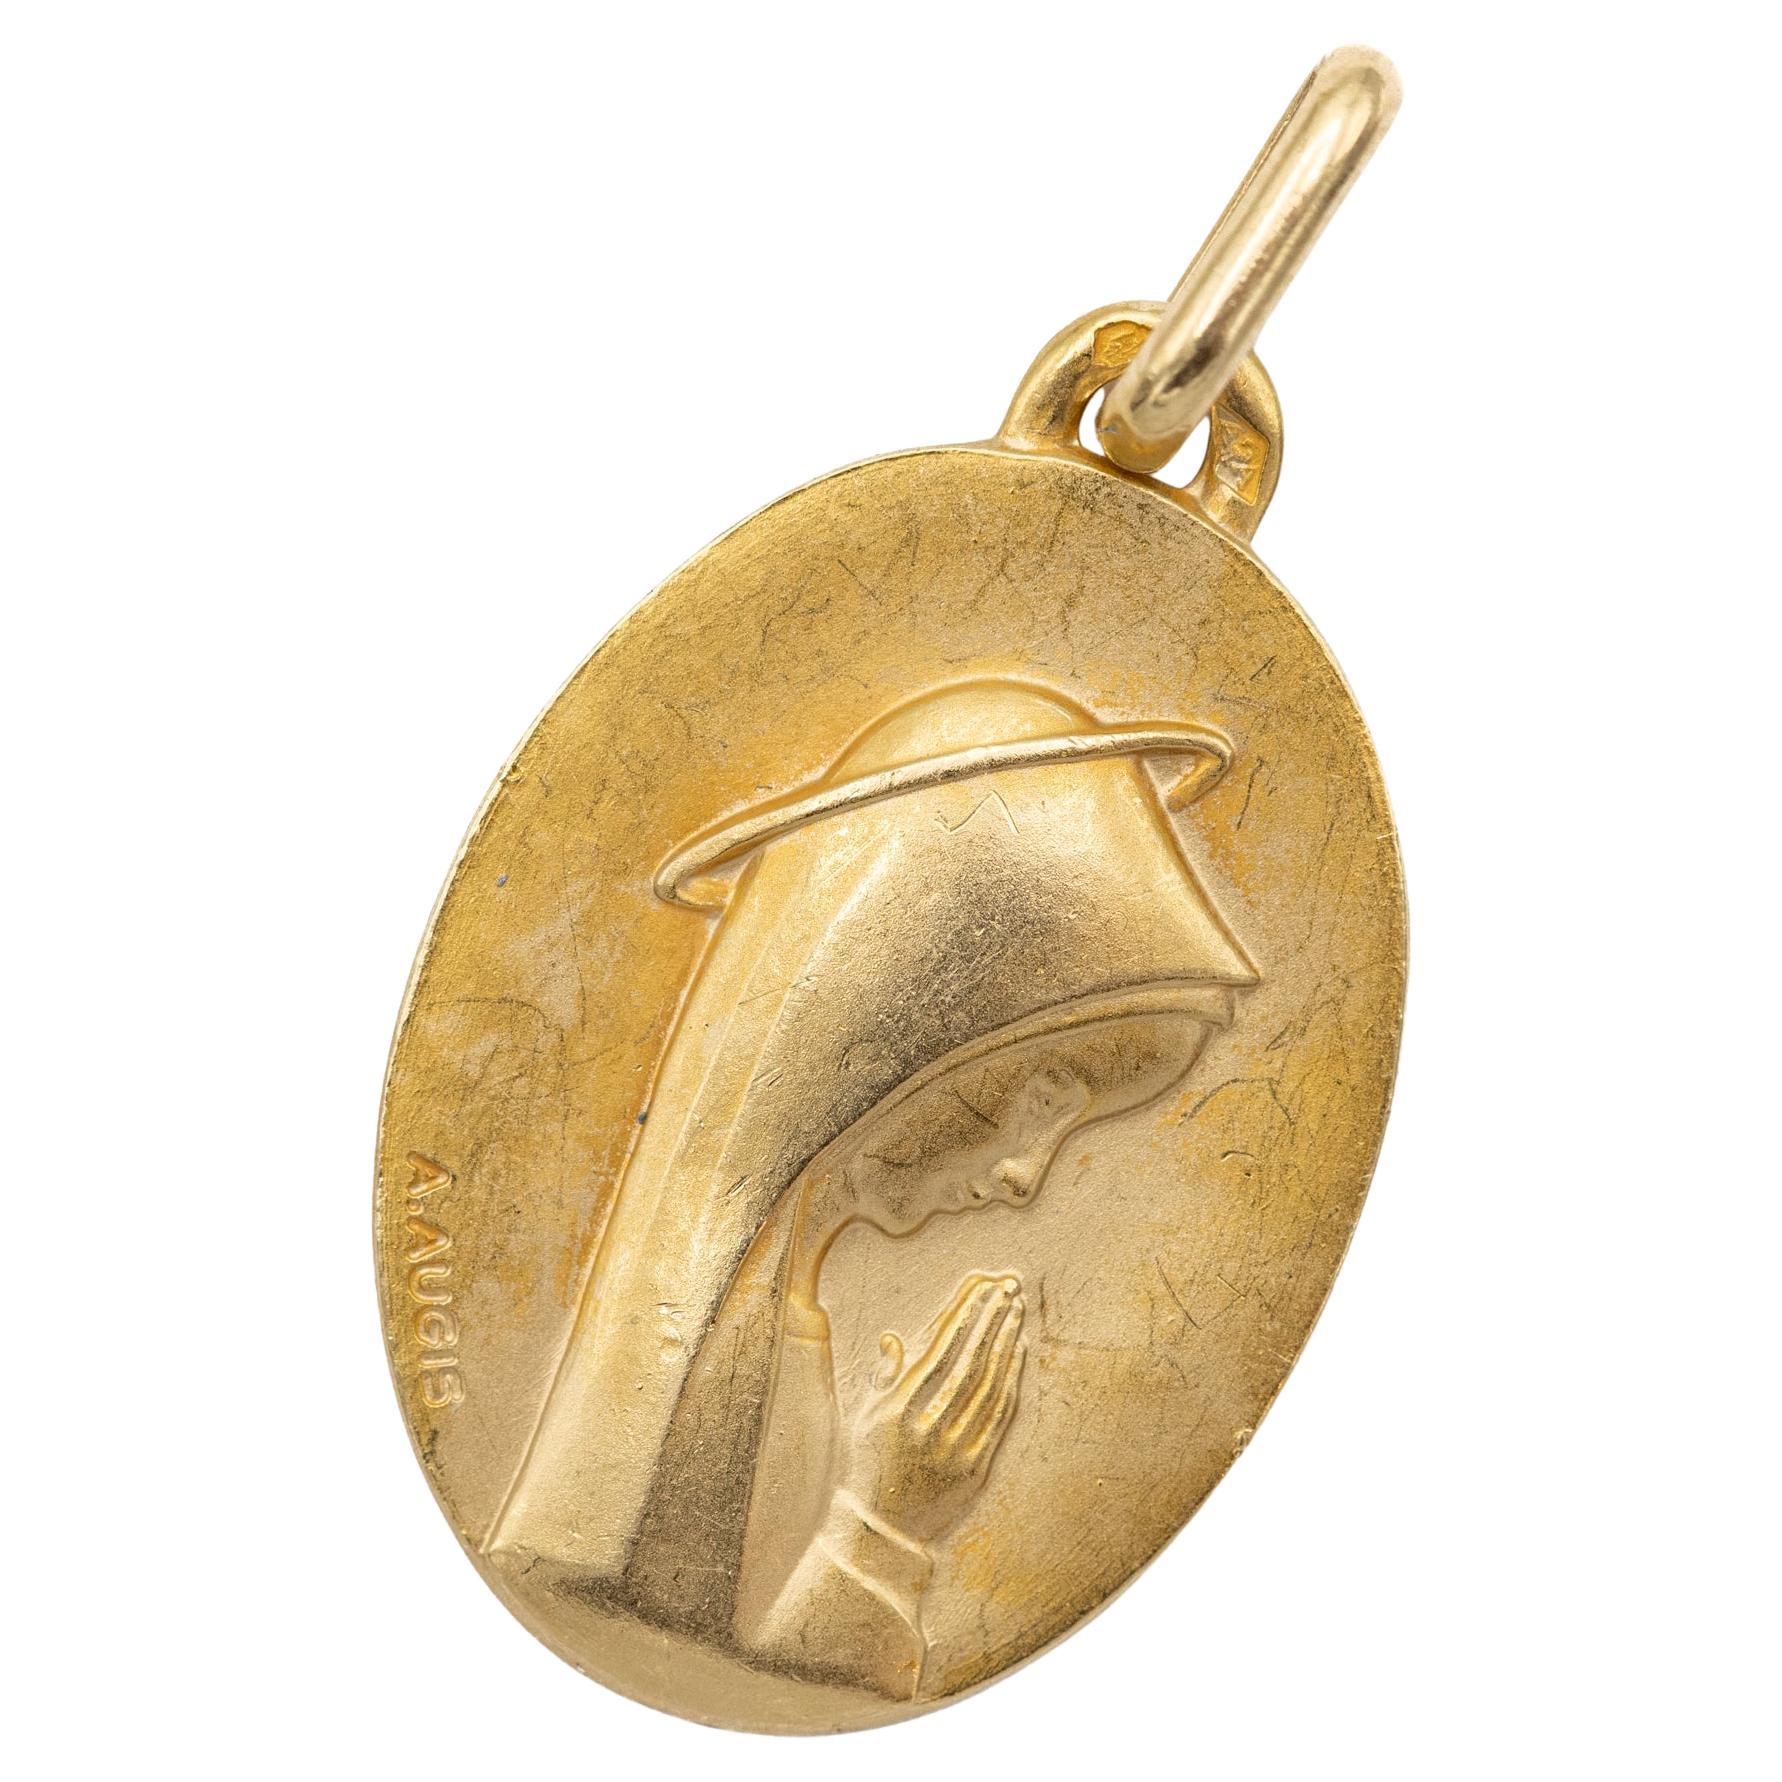 A. Augis - 18 k yellow gold Virgin Mary charm - Vintage Catholic pendant